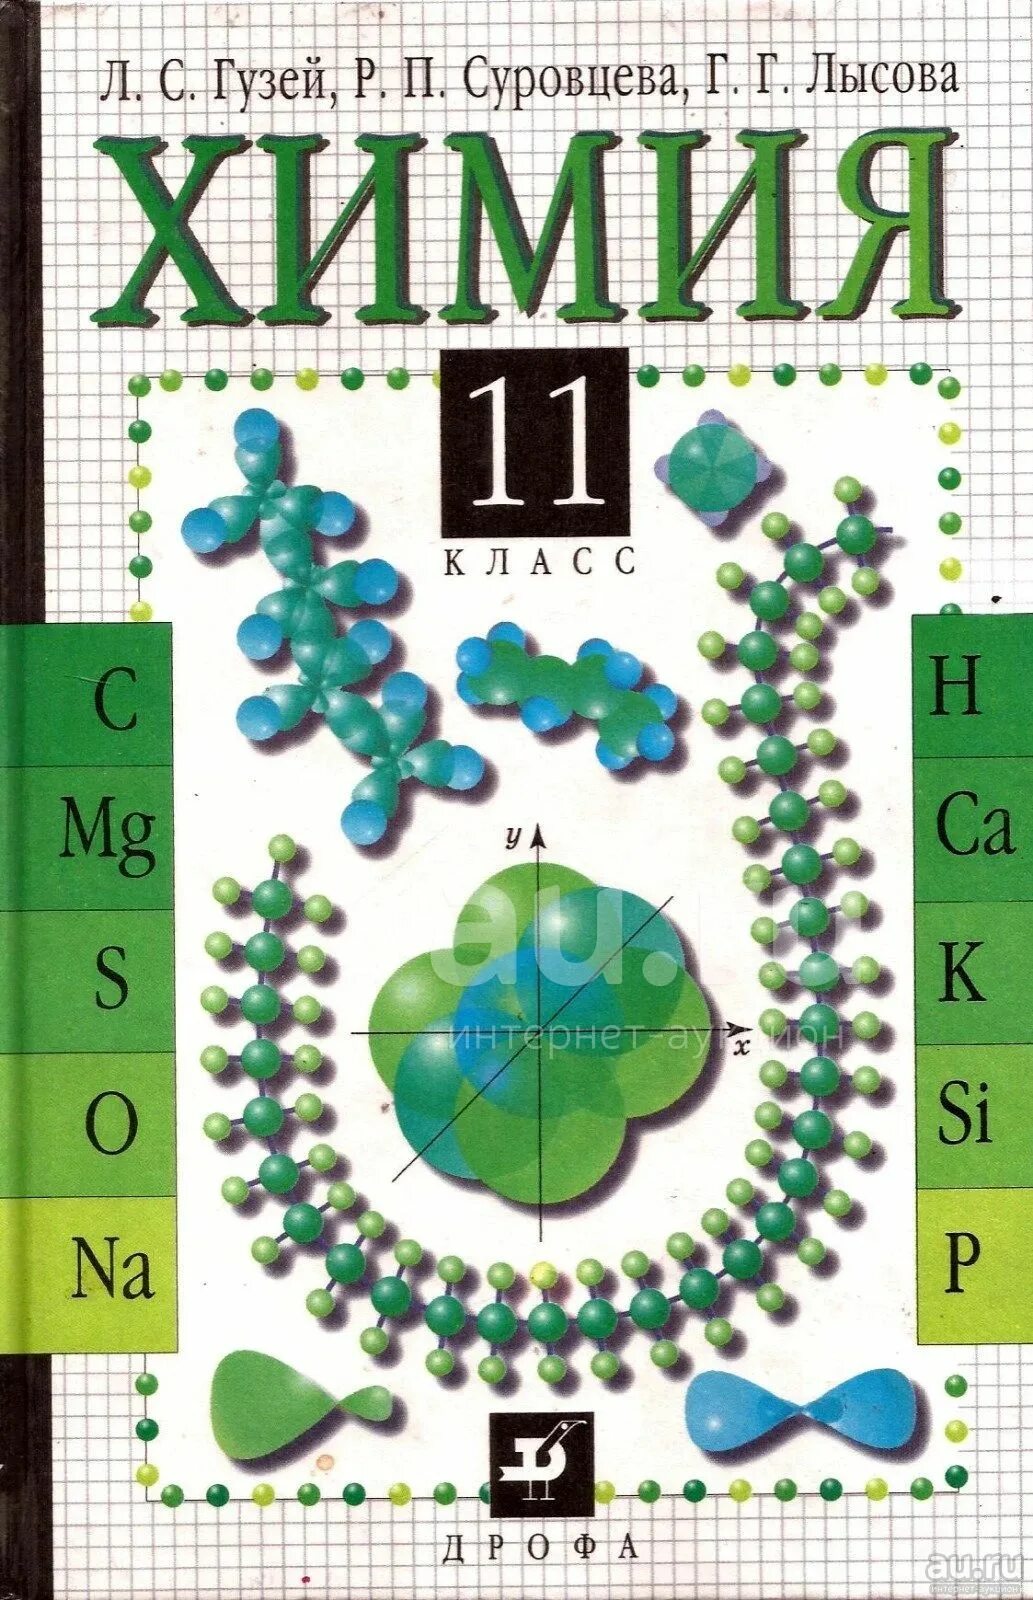 Химия 11 класс книга. Химия учебник Гузей Суровцева. Химия учебник 11. Химия 10-11 класс учебник. Учебник химия 11 еремин